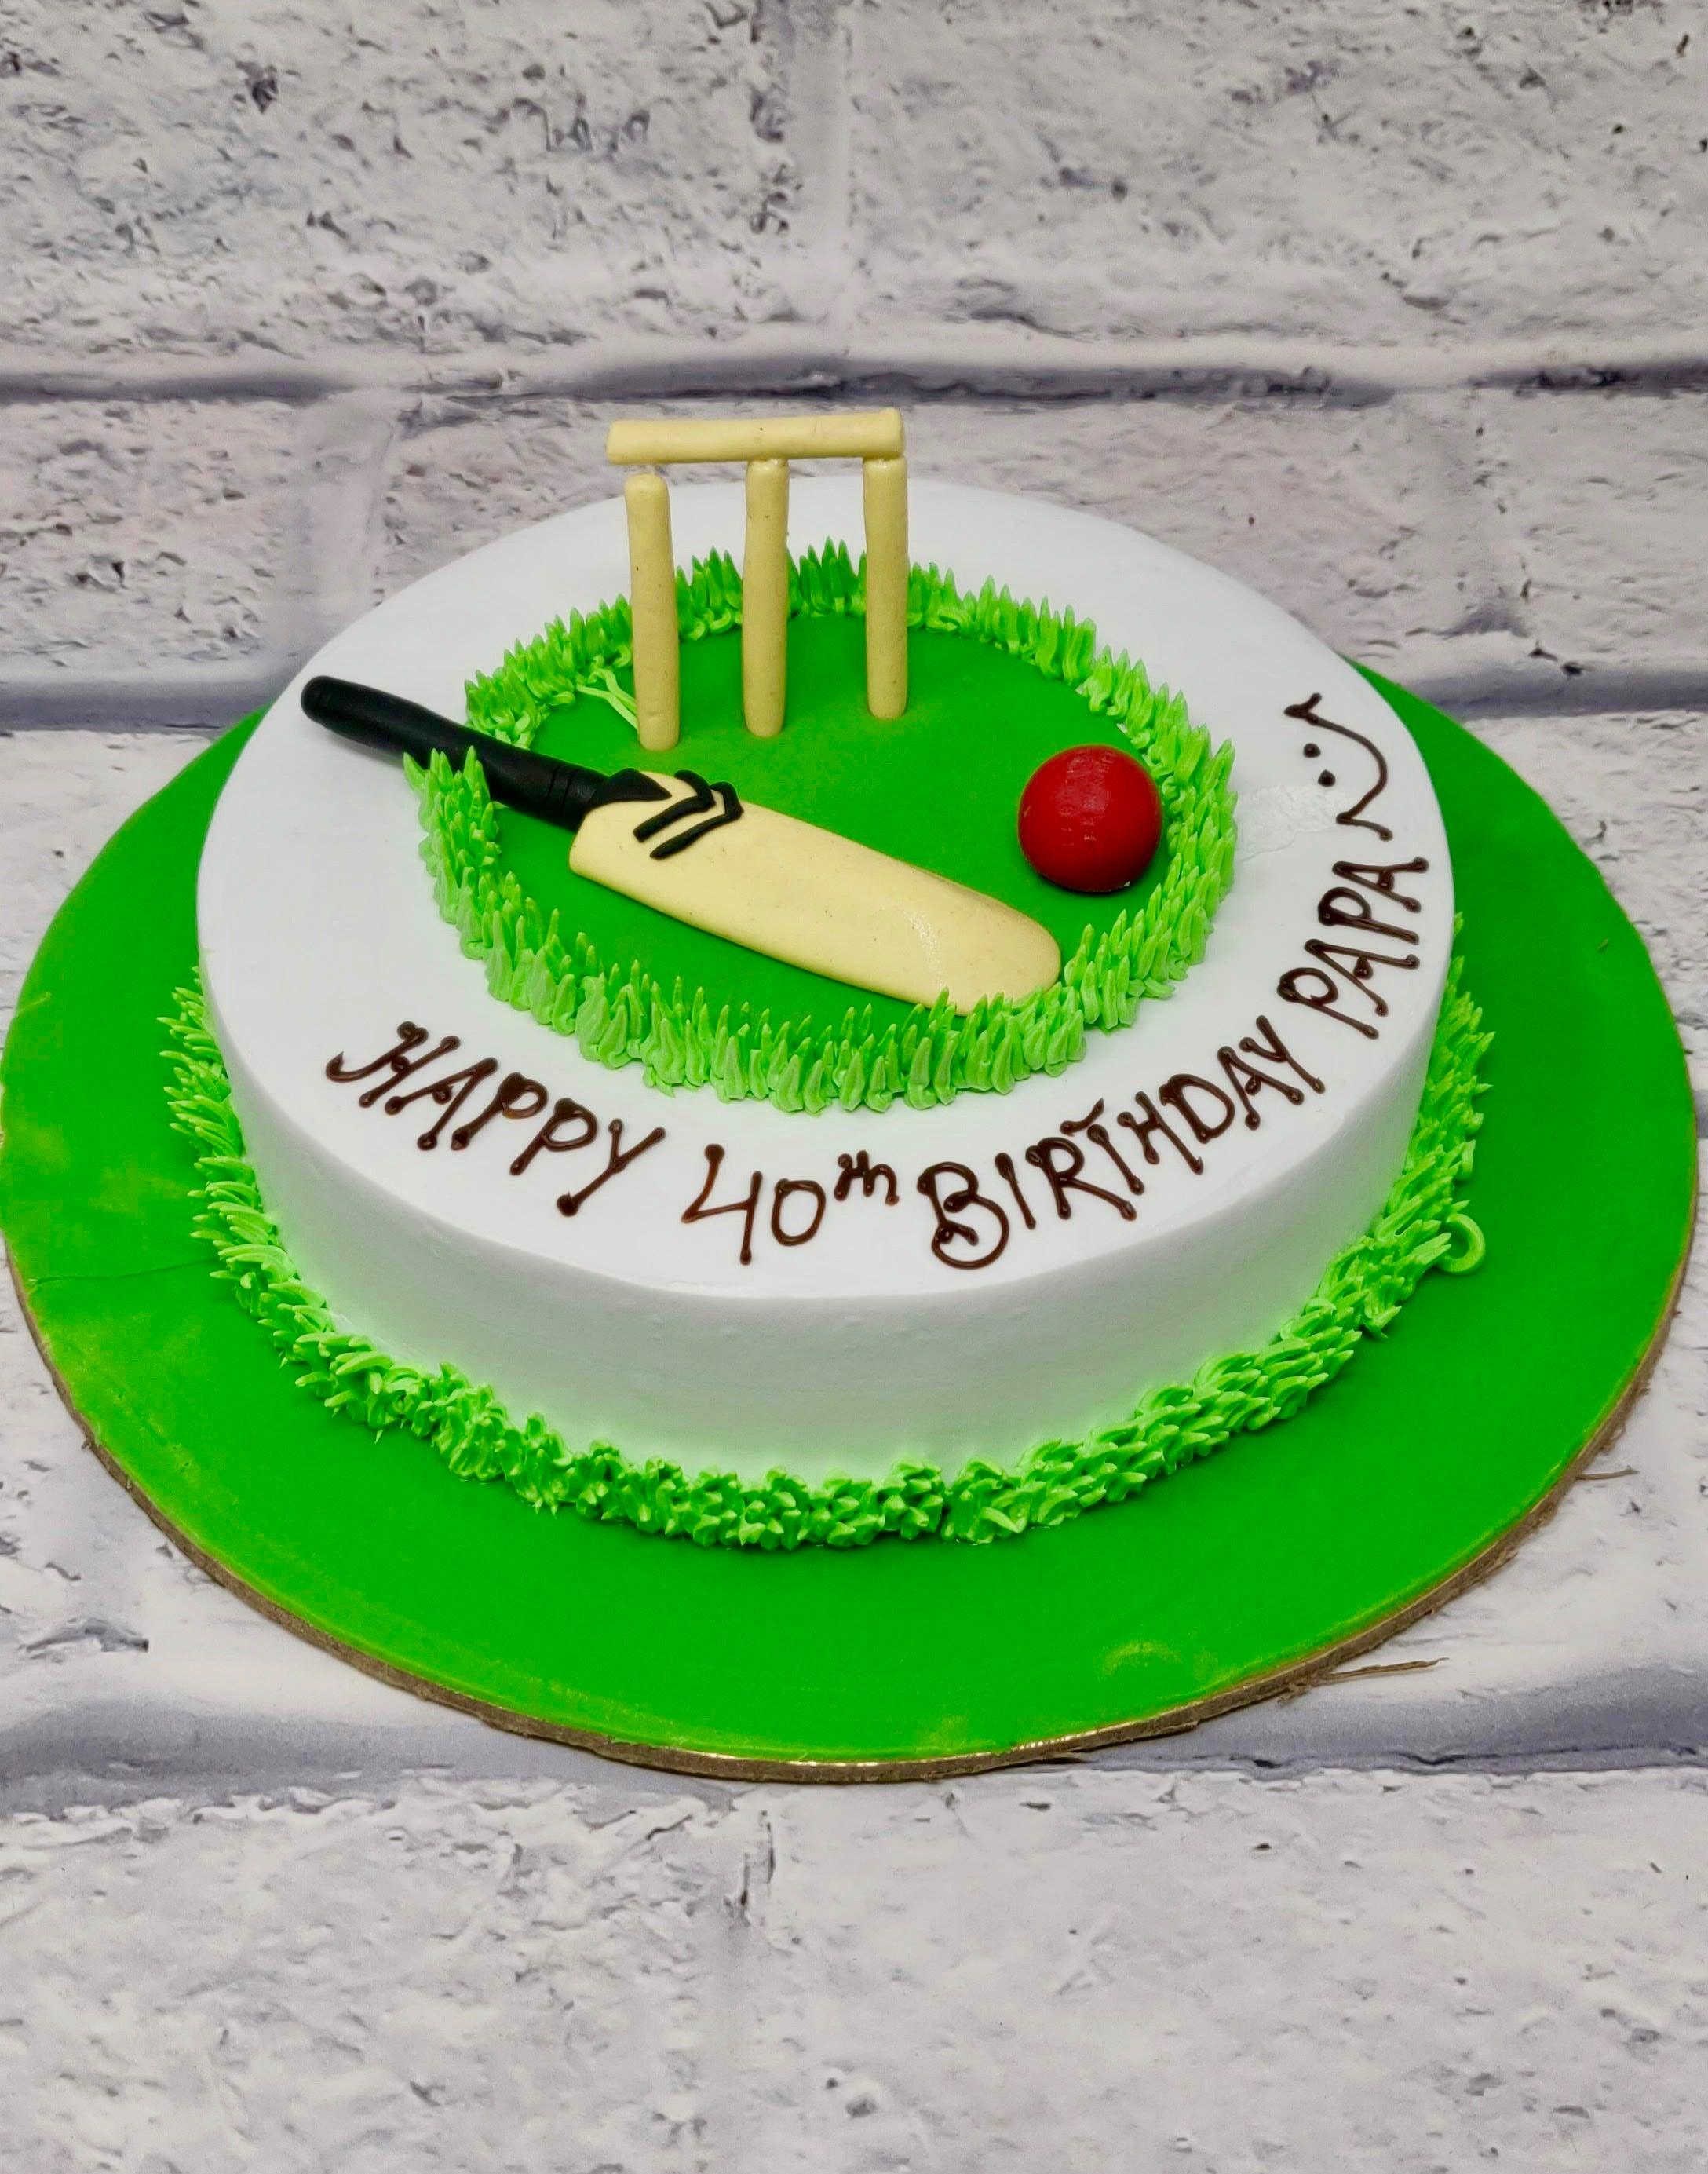 Customized Cricket Theme cake by bakisto - the cake company